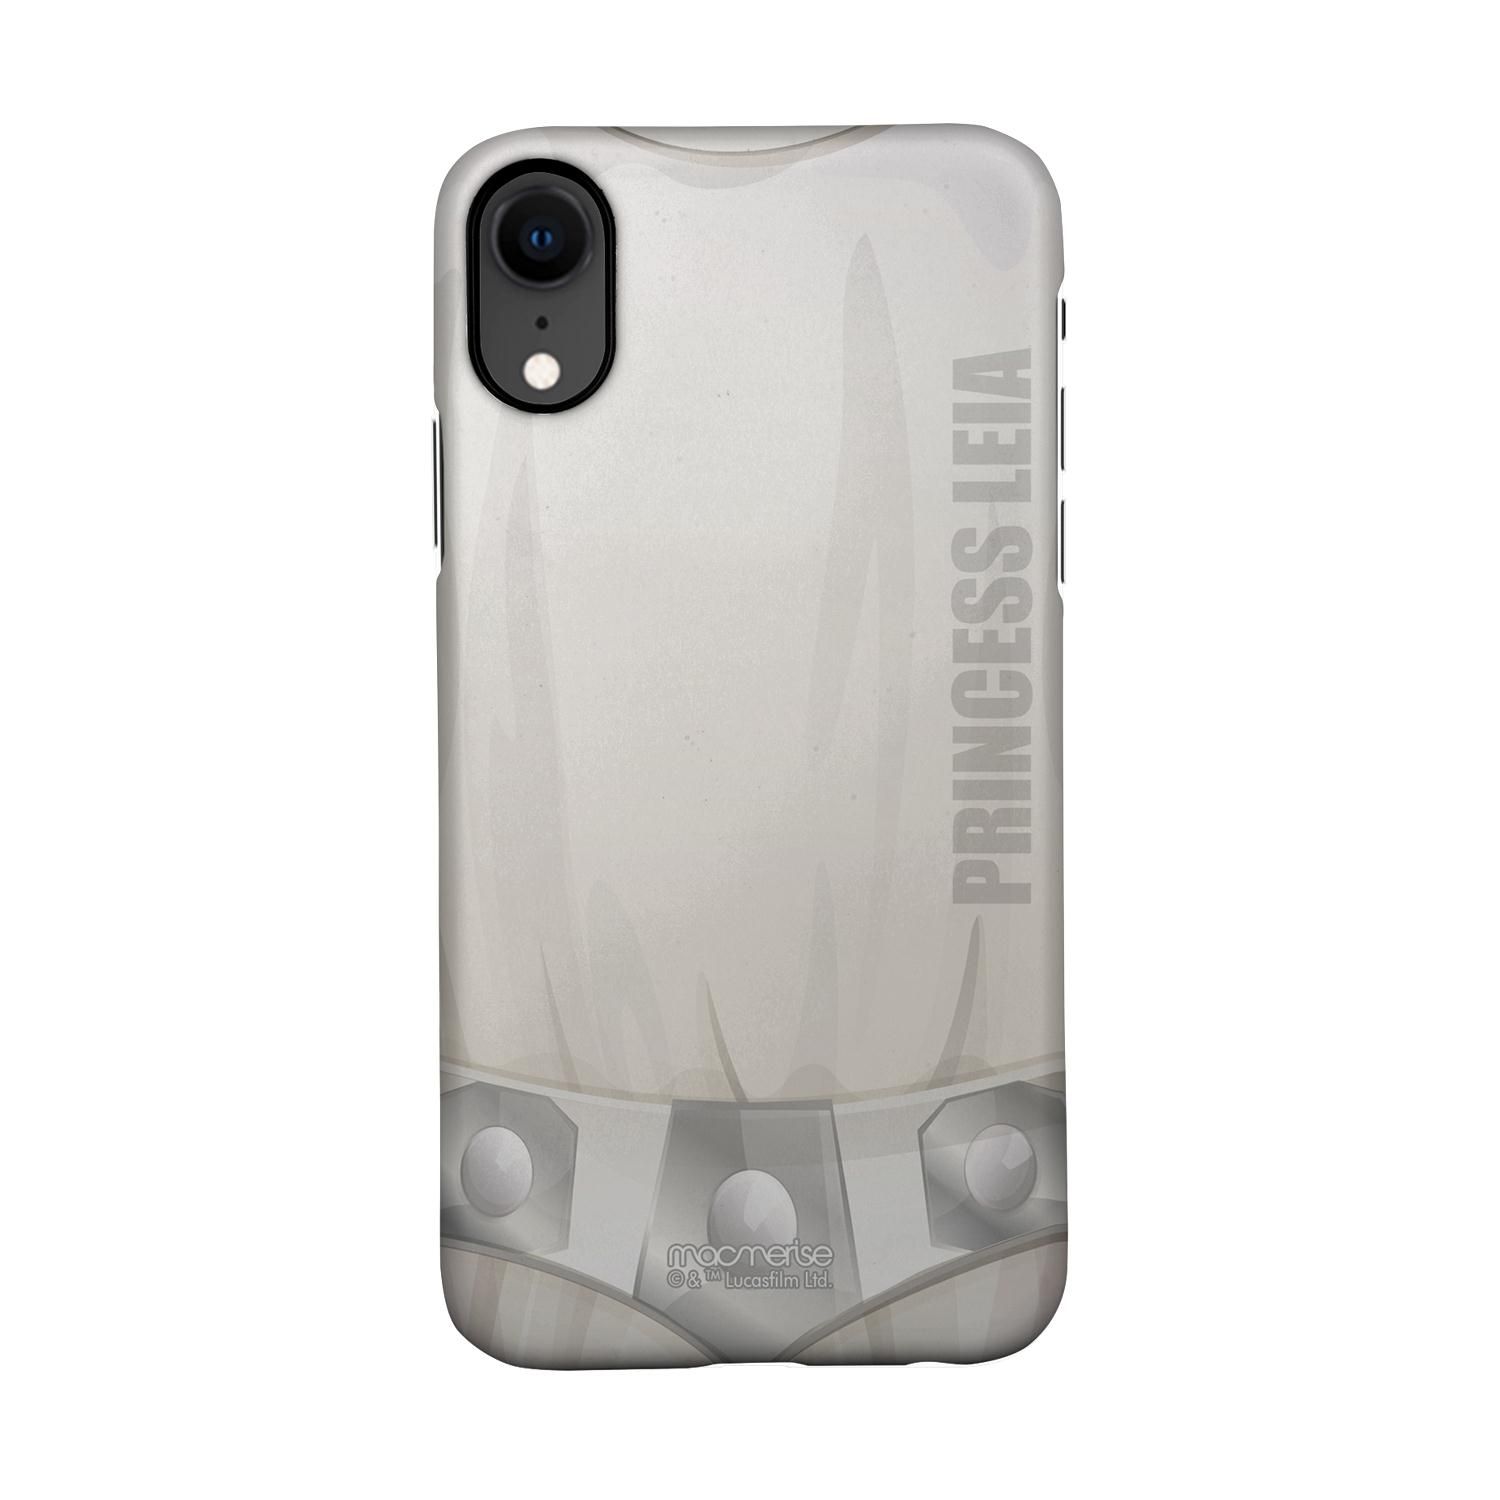 Buy Attire Leia - Sleek Phone Case for iPhone XR Online